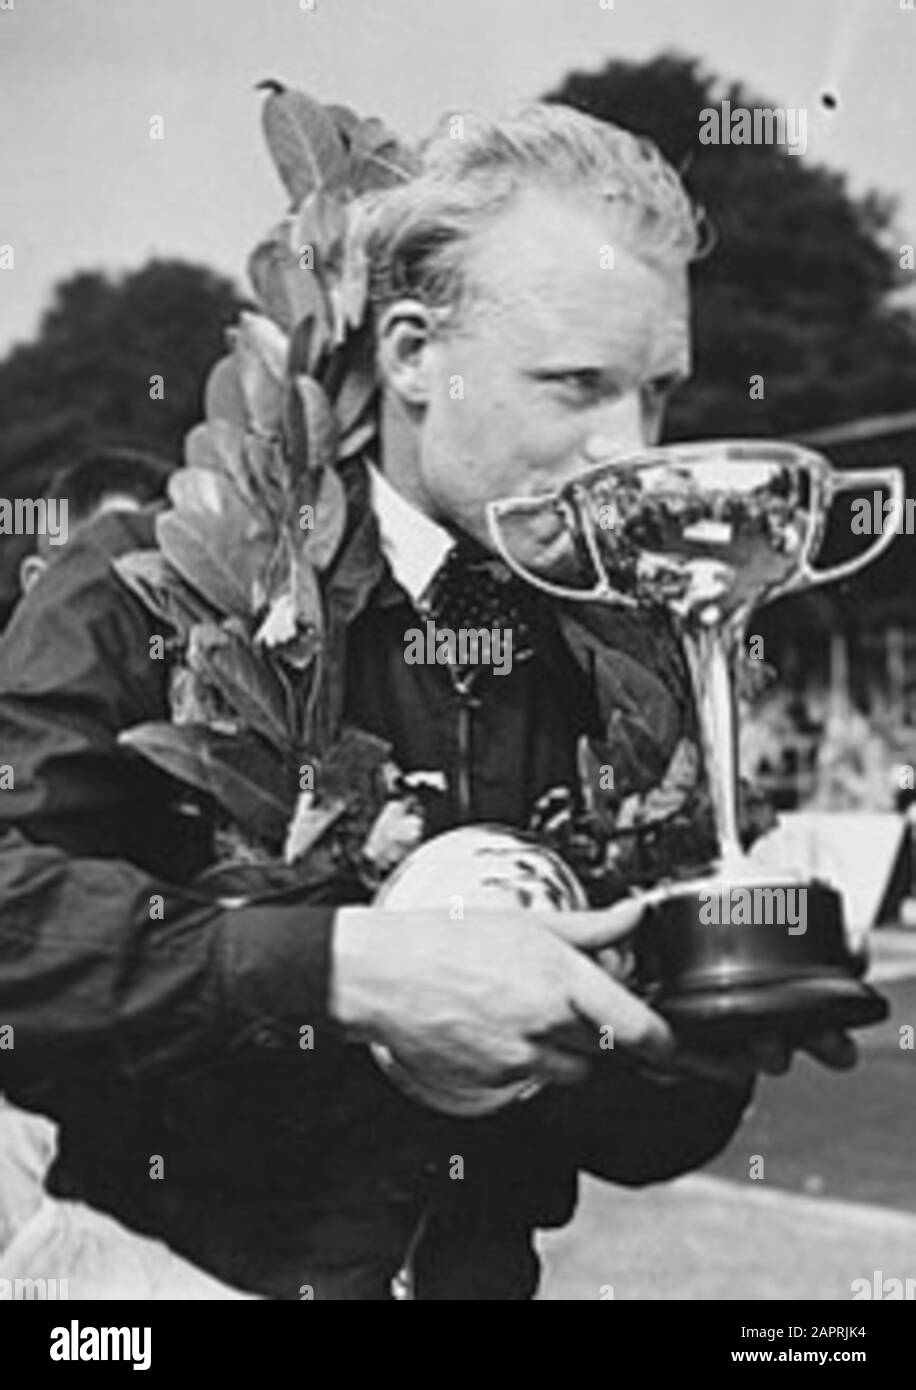 Mike Hawthorn, racing driver crashed Date: 22 January 1959 Keywords: racing drivers Stock Photo